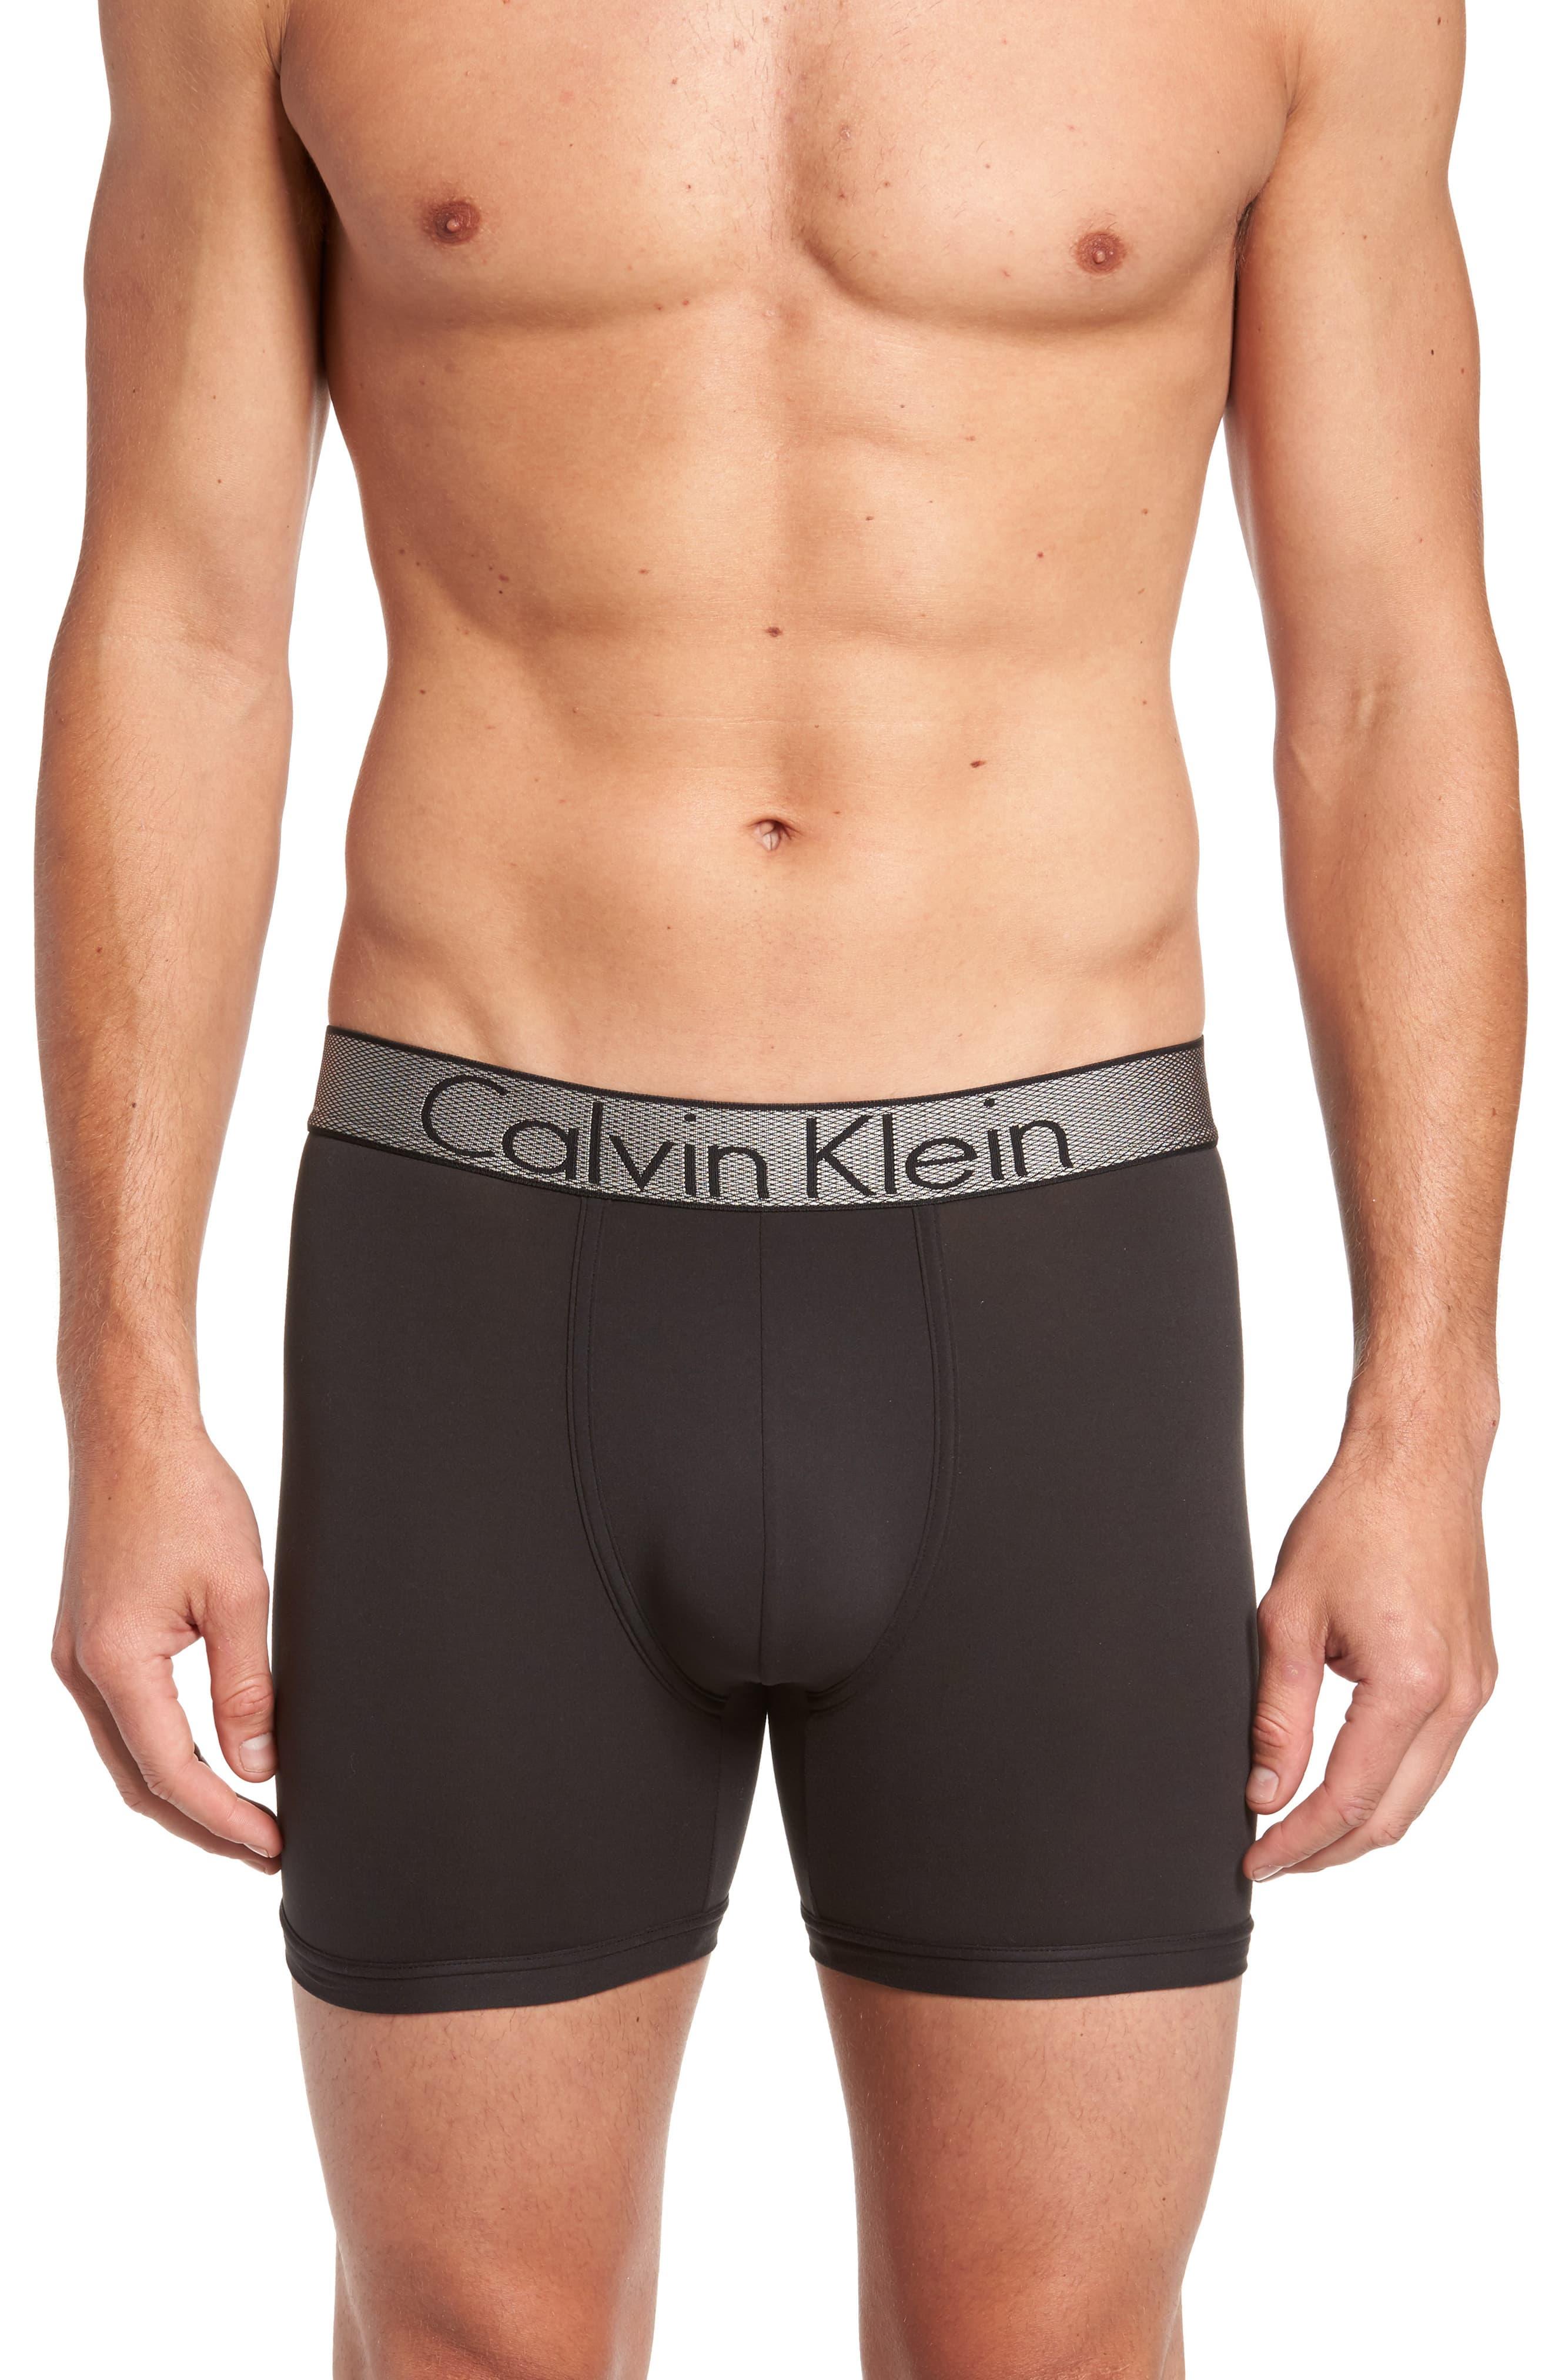 Calvin Klein Customized Stretch Boxer Briefs in Black for Men - Save 54